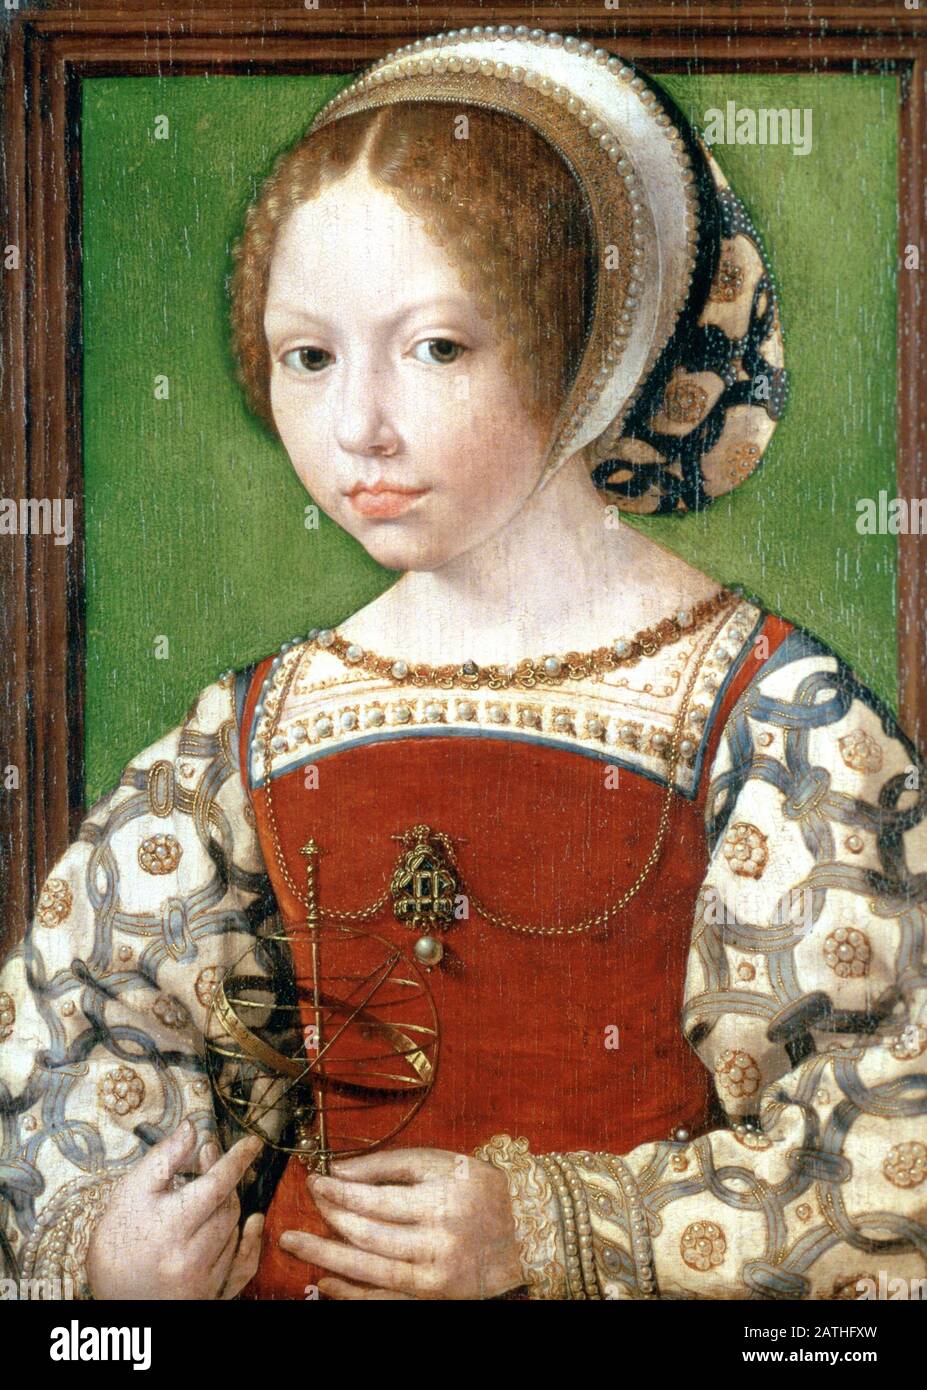 Jan Gossaert Dutch school A Young Princess (Dorothea of Denmark?) Abour 1530-1532 Oil on oak (38.2 x 29.1 cm) London, National Gallery Stock Photo